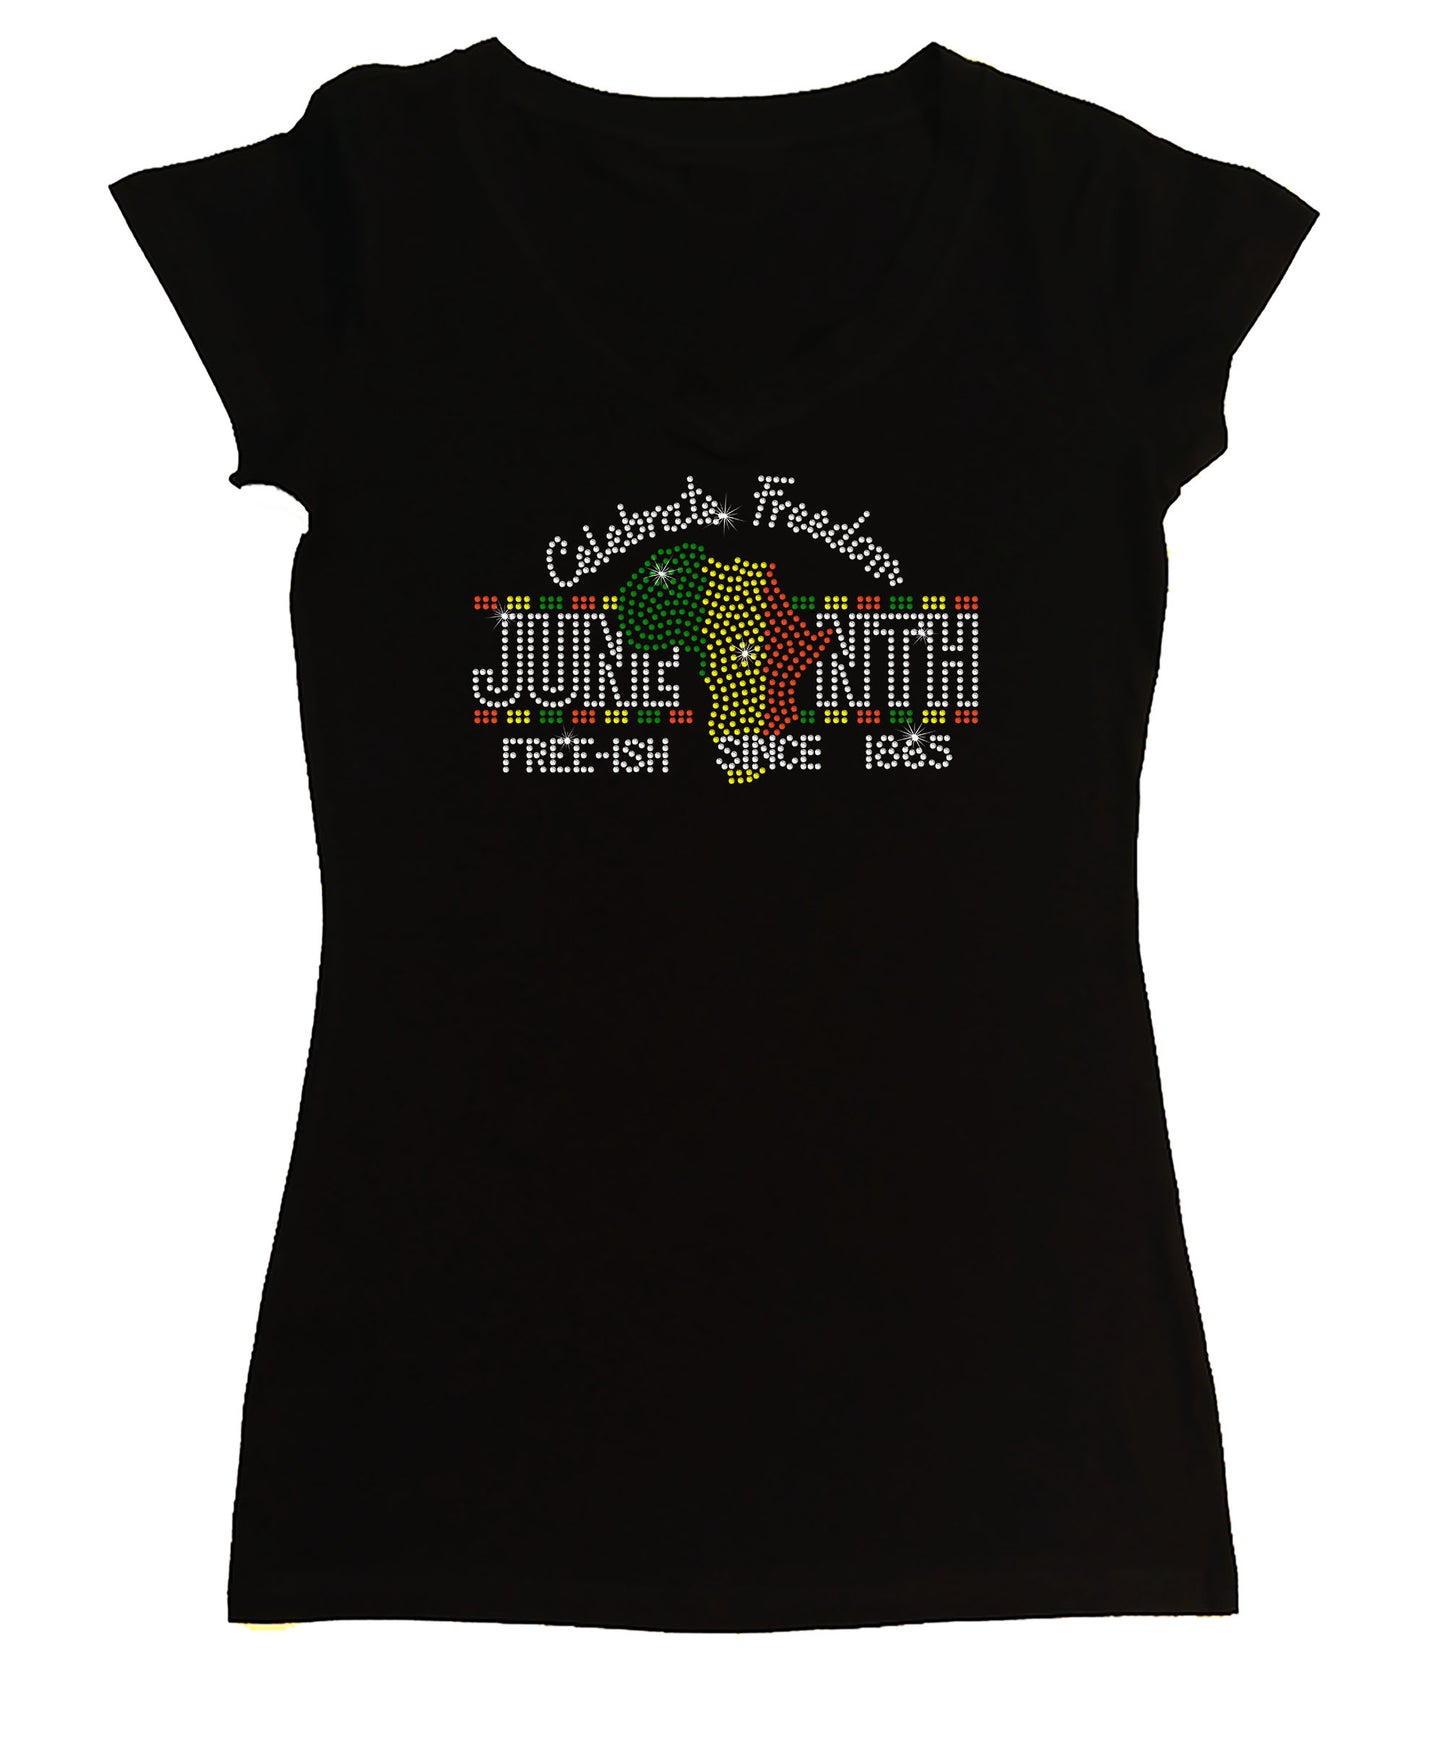 Women's Rhinestone Fitted Tight Snug Celebrate Freedom - Juneteenth, Free-ish, 1865, Juneteenth Shirt